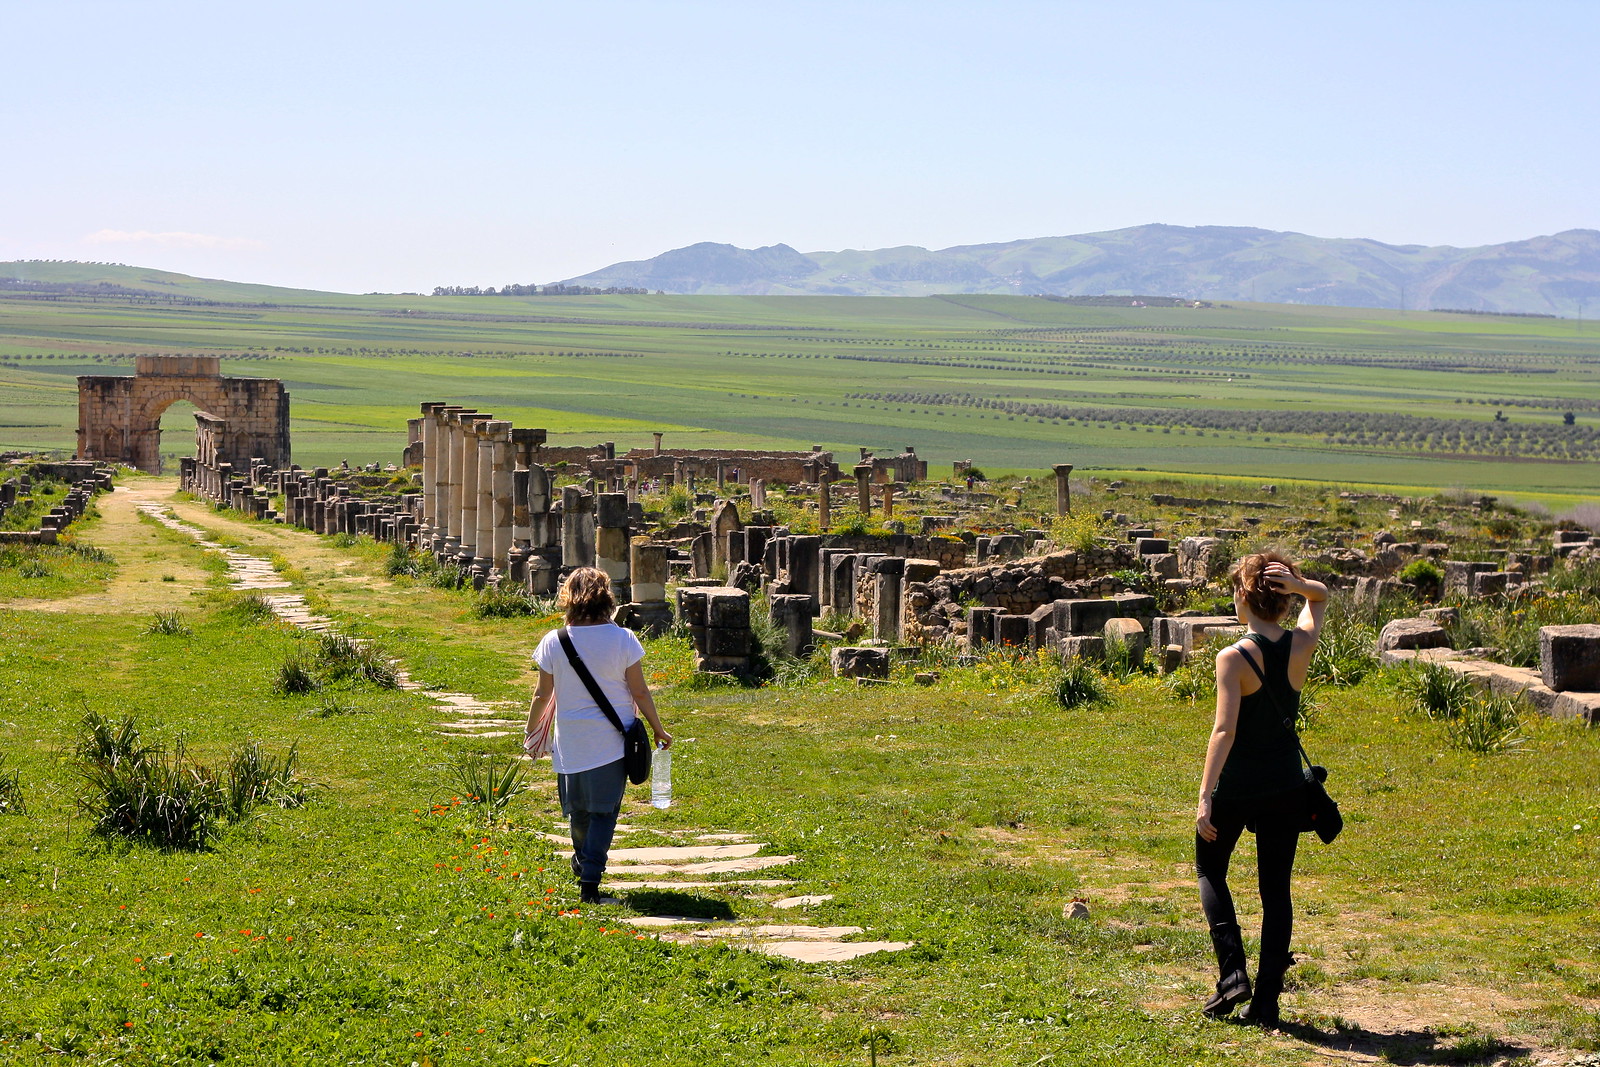 Roman ruins of Volubilis, Morocco